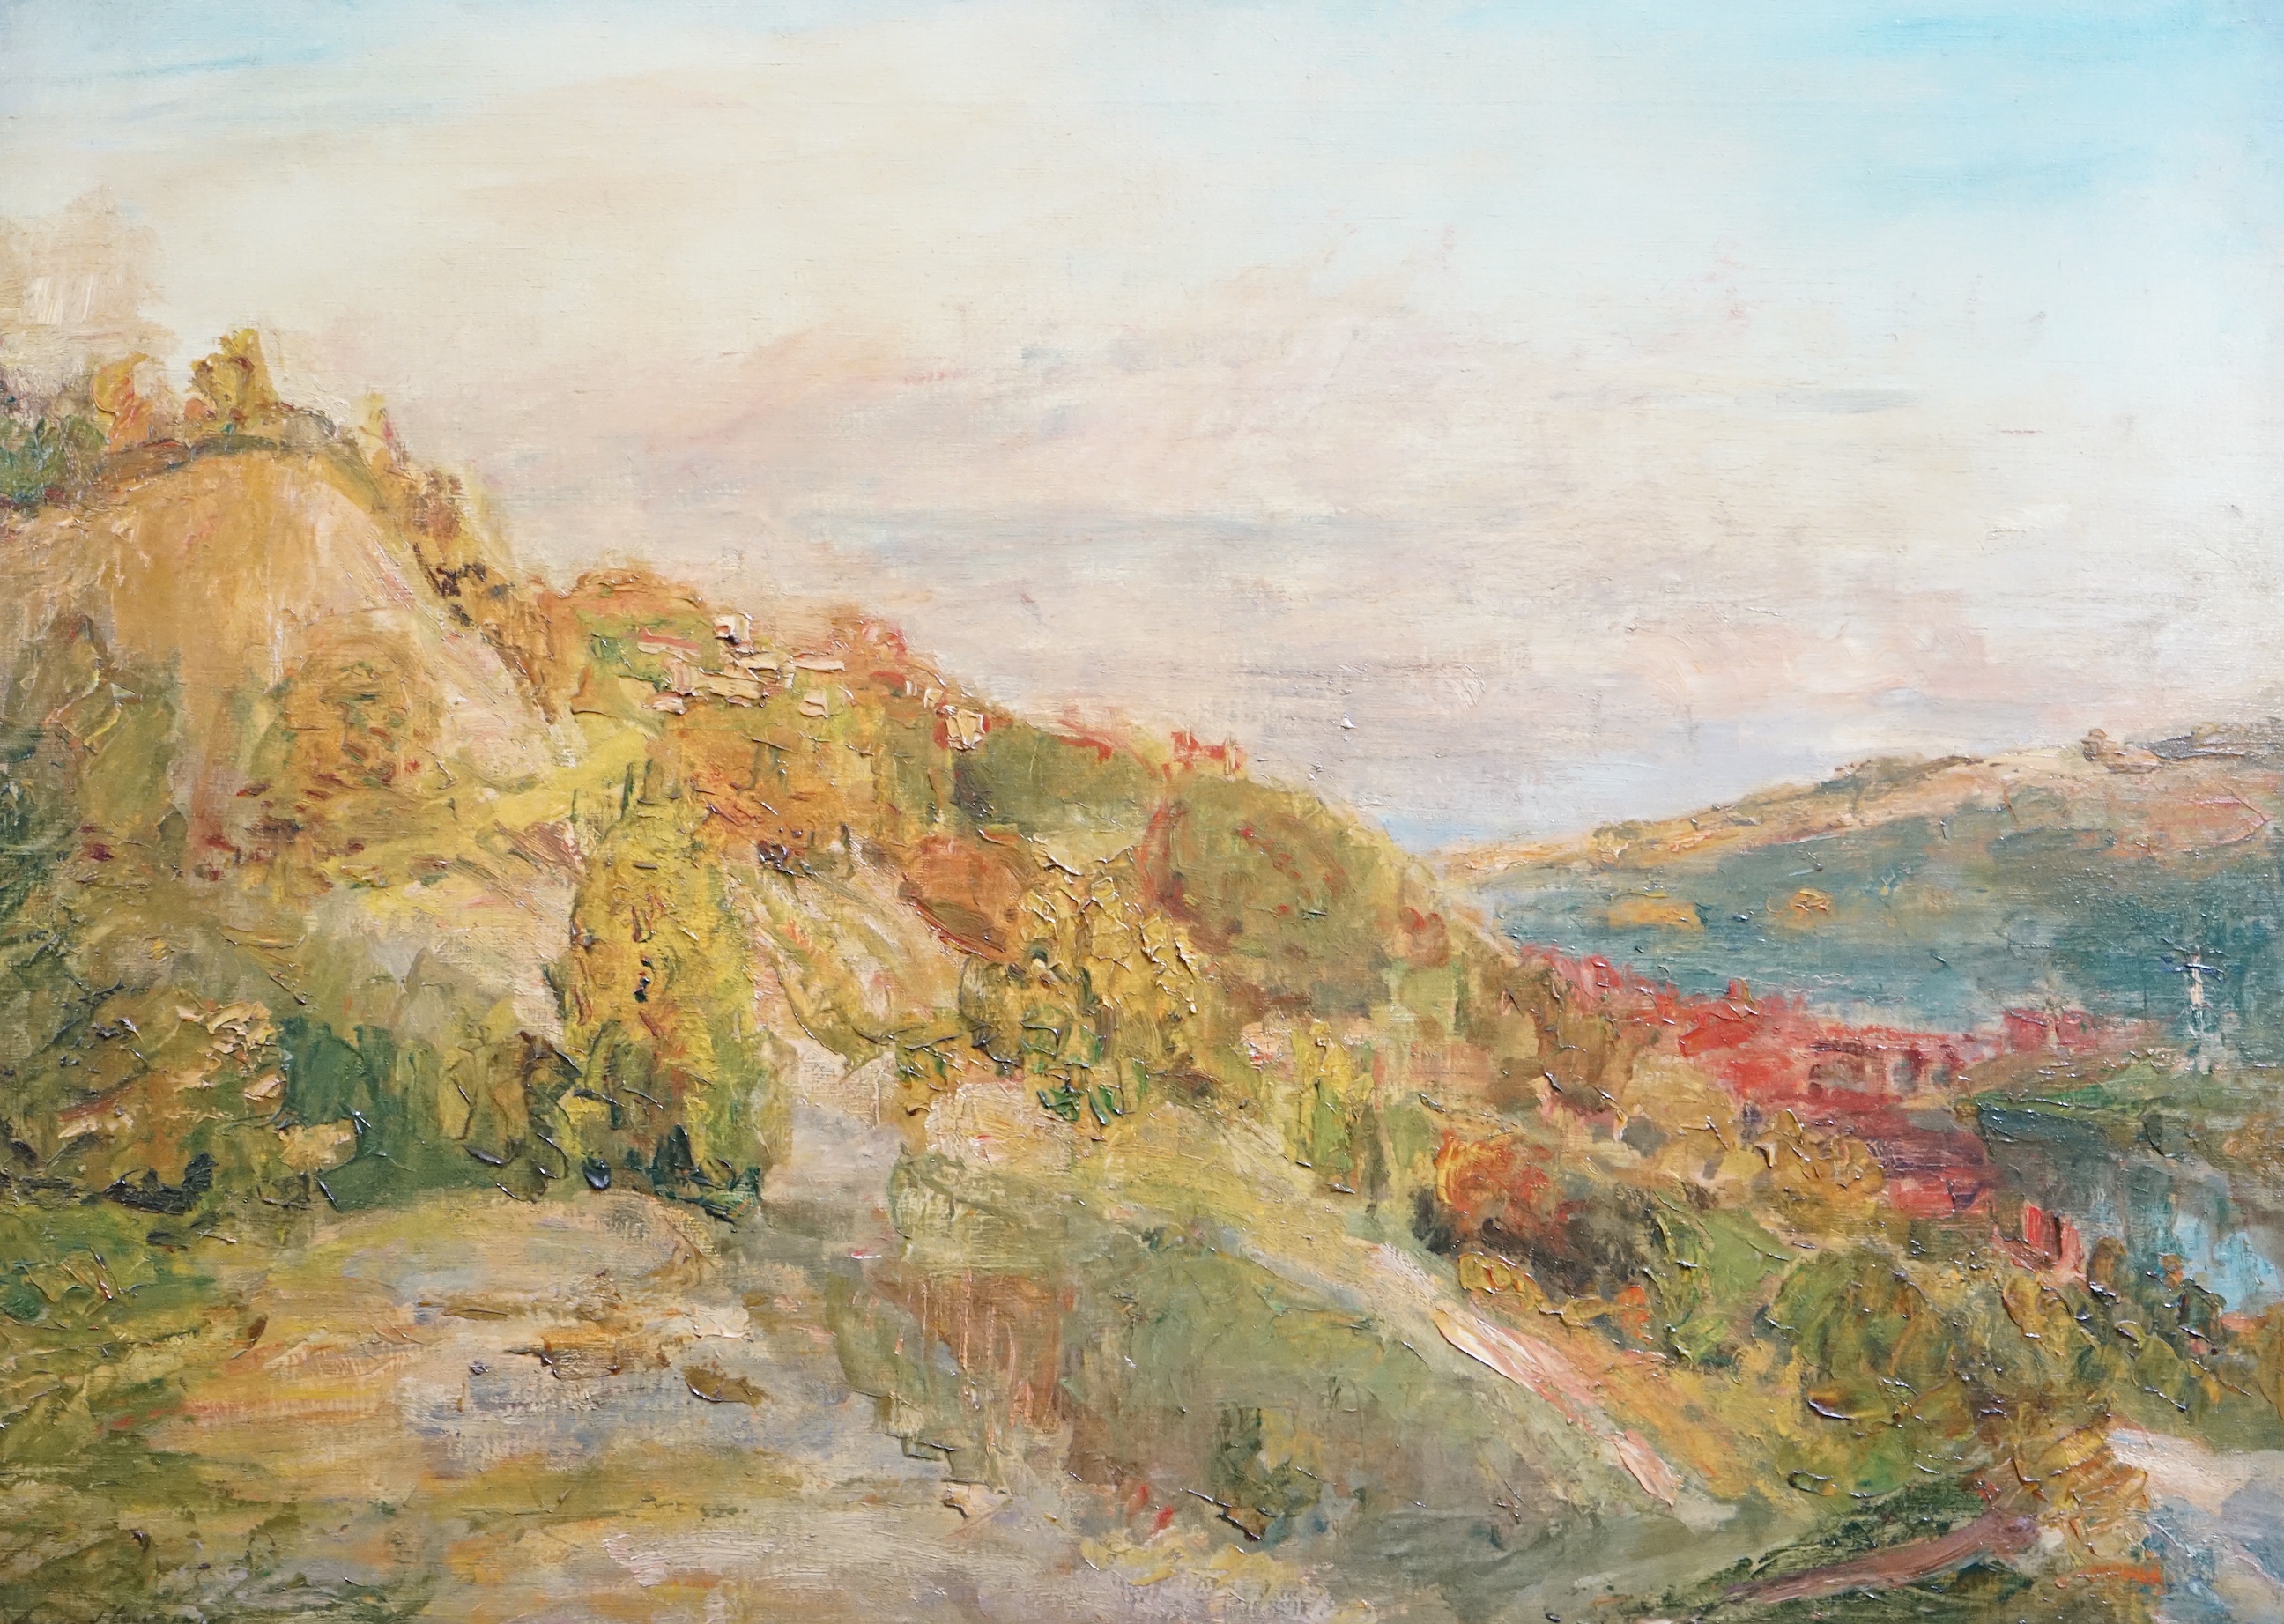 Philip Wilson Steer (British, 1860-1942), 'The Red Bridge, Ironbridge', oil on canvas, 76 x 107cm